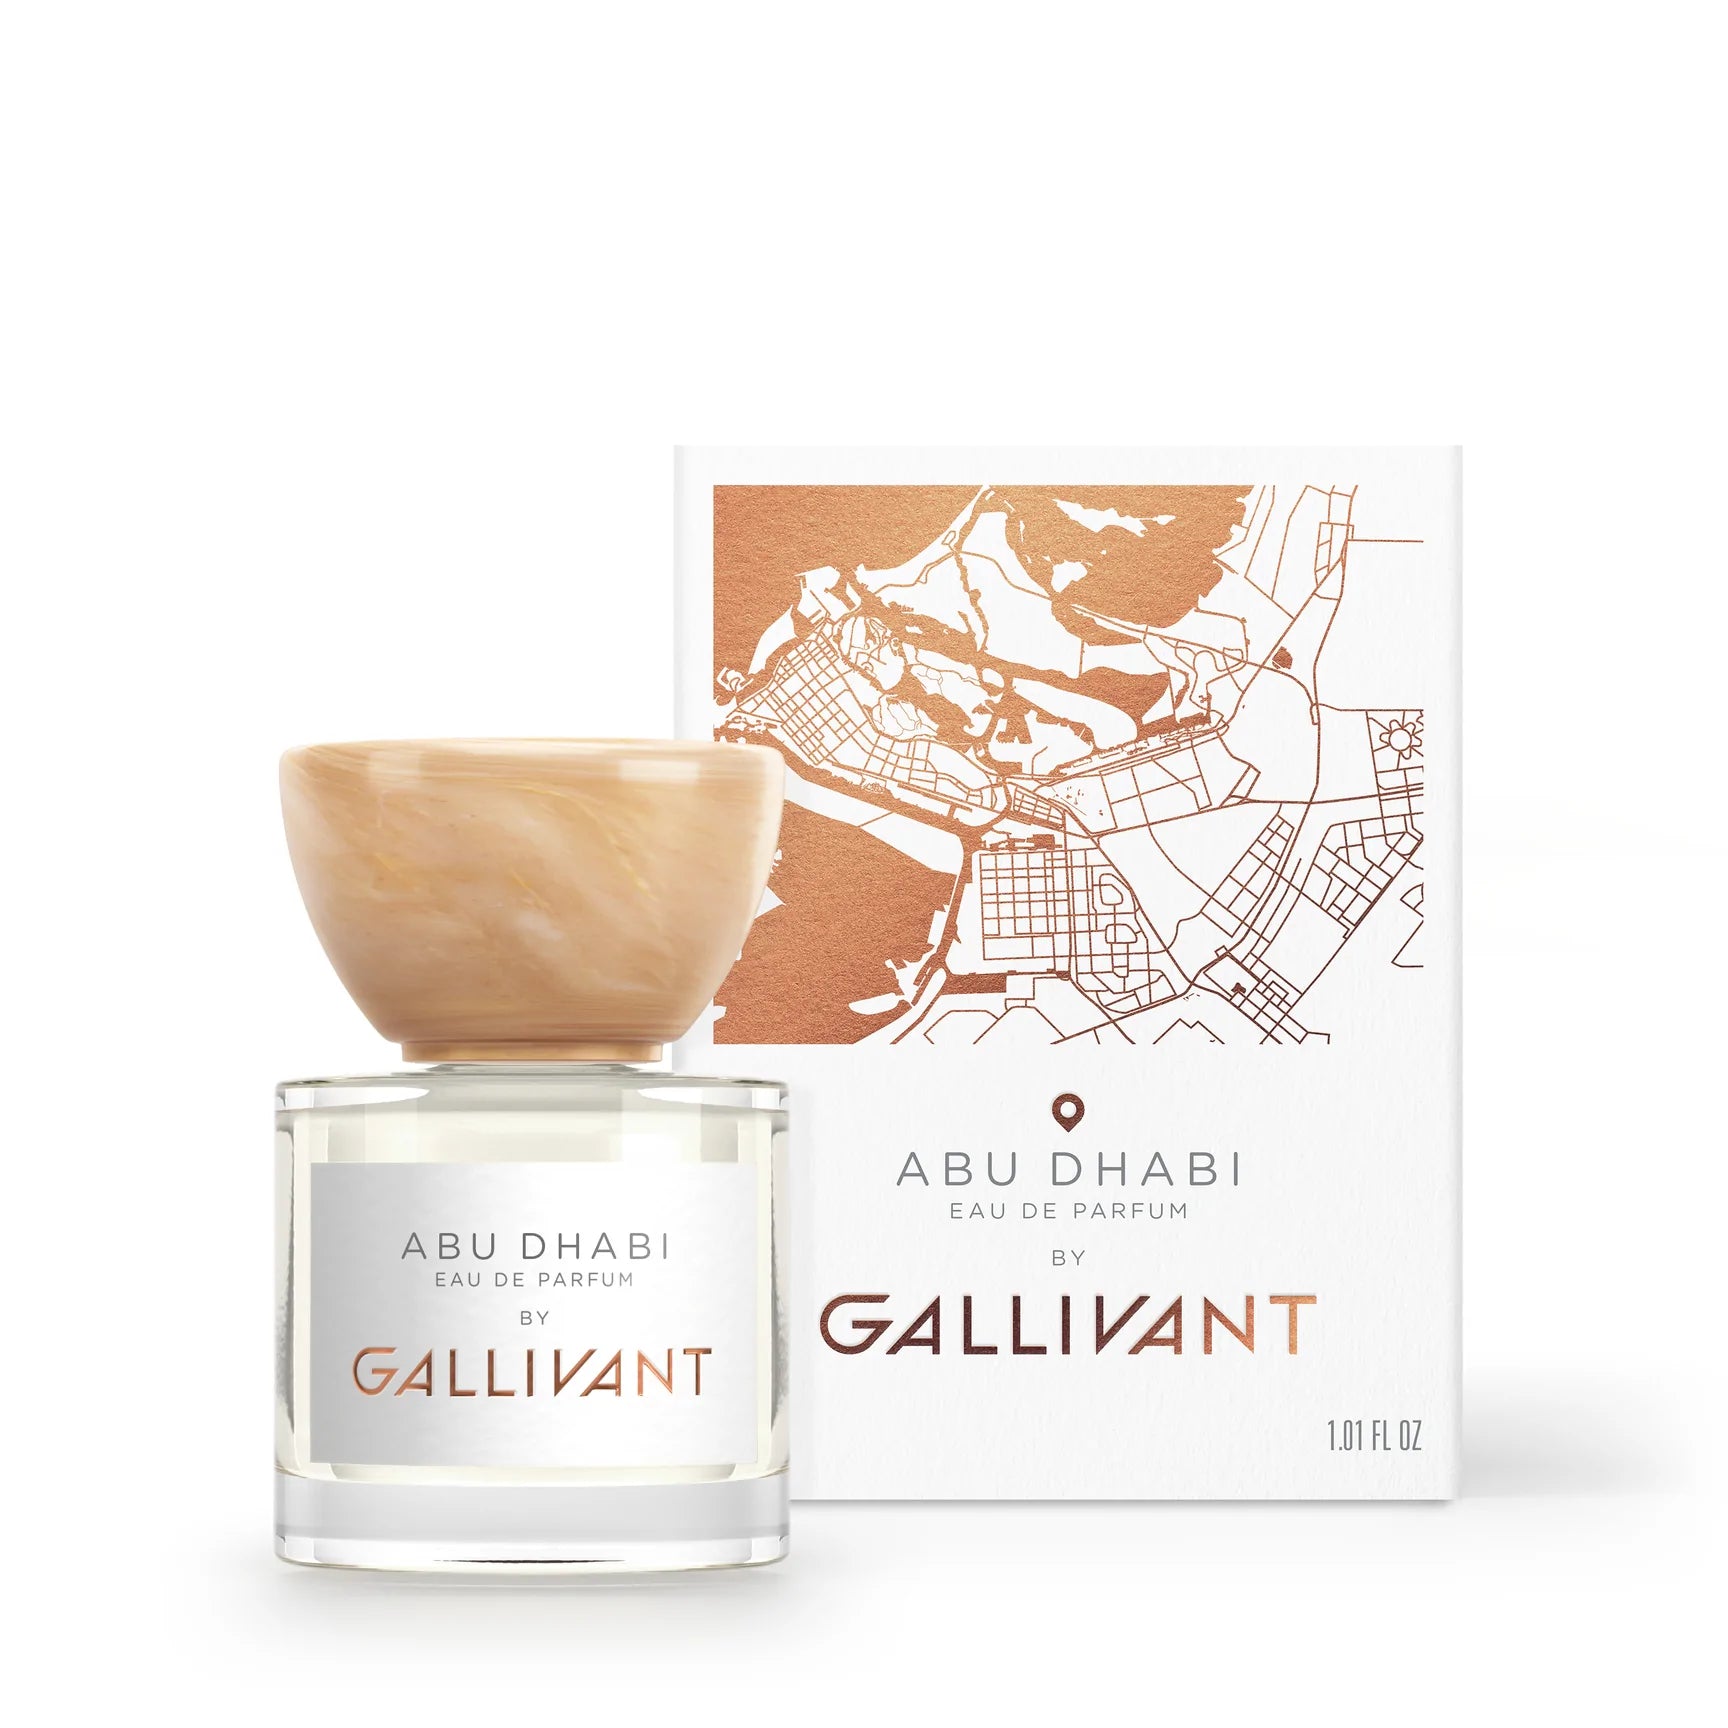 Abu Dhabi 30ml Eau de Parfum Bottle and Box by Gallivant